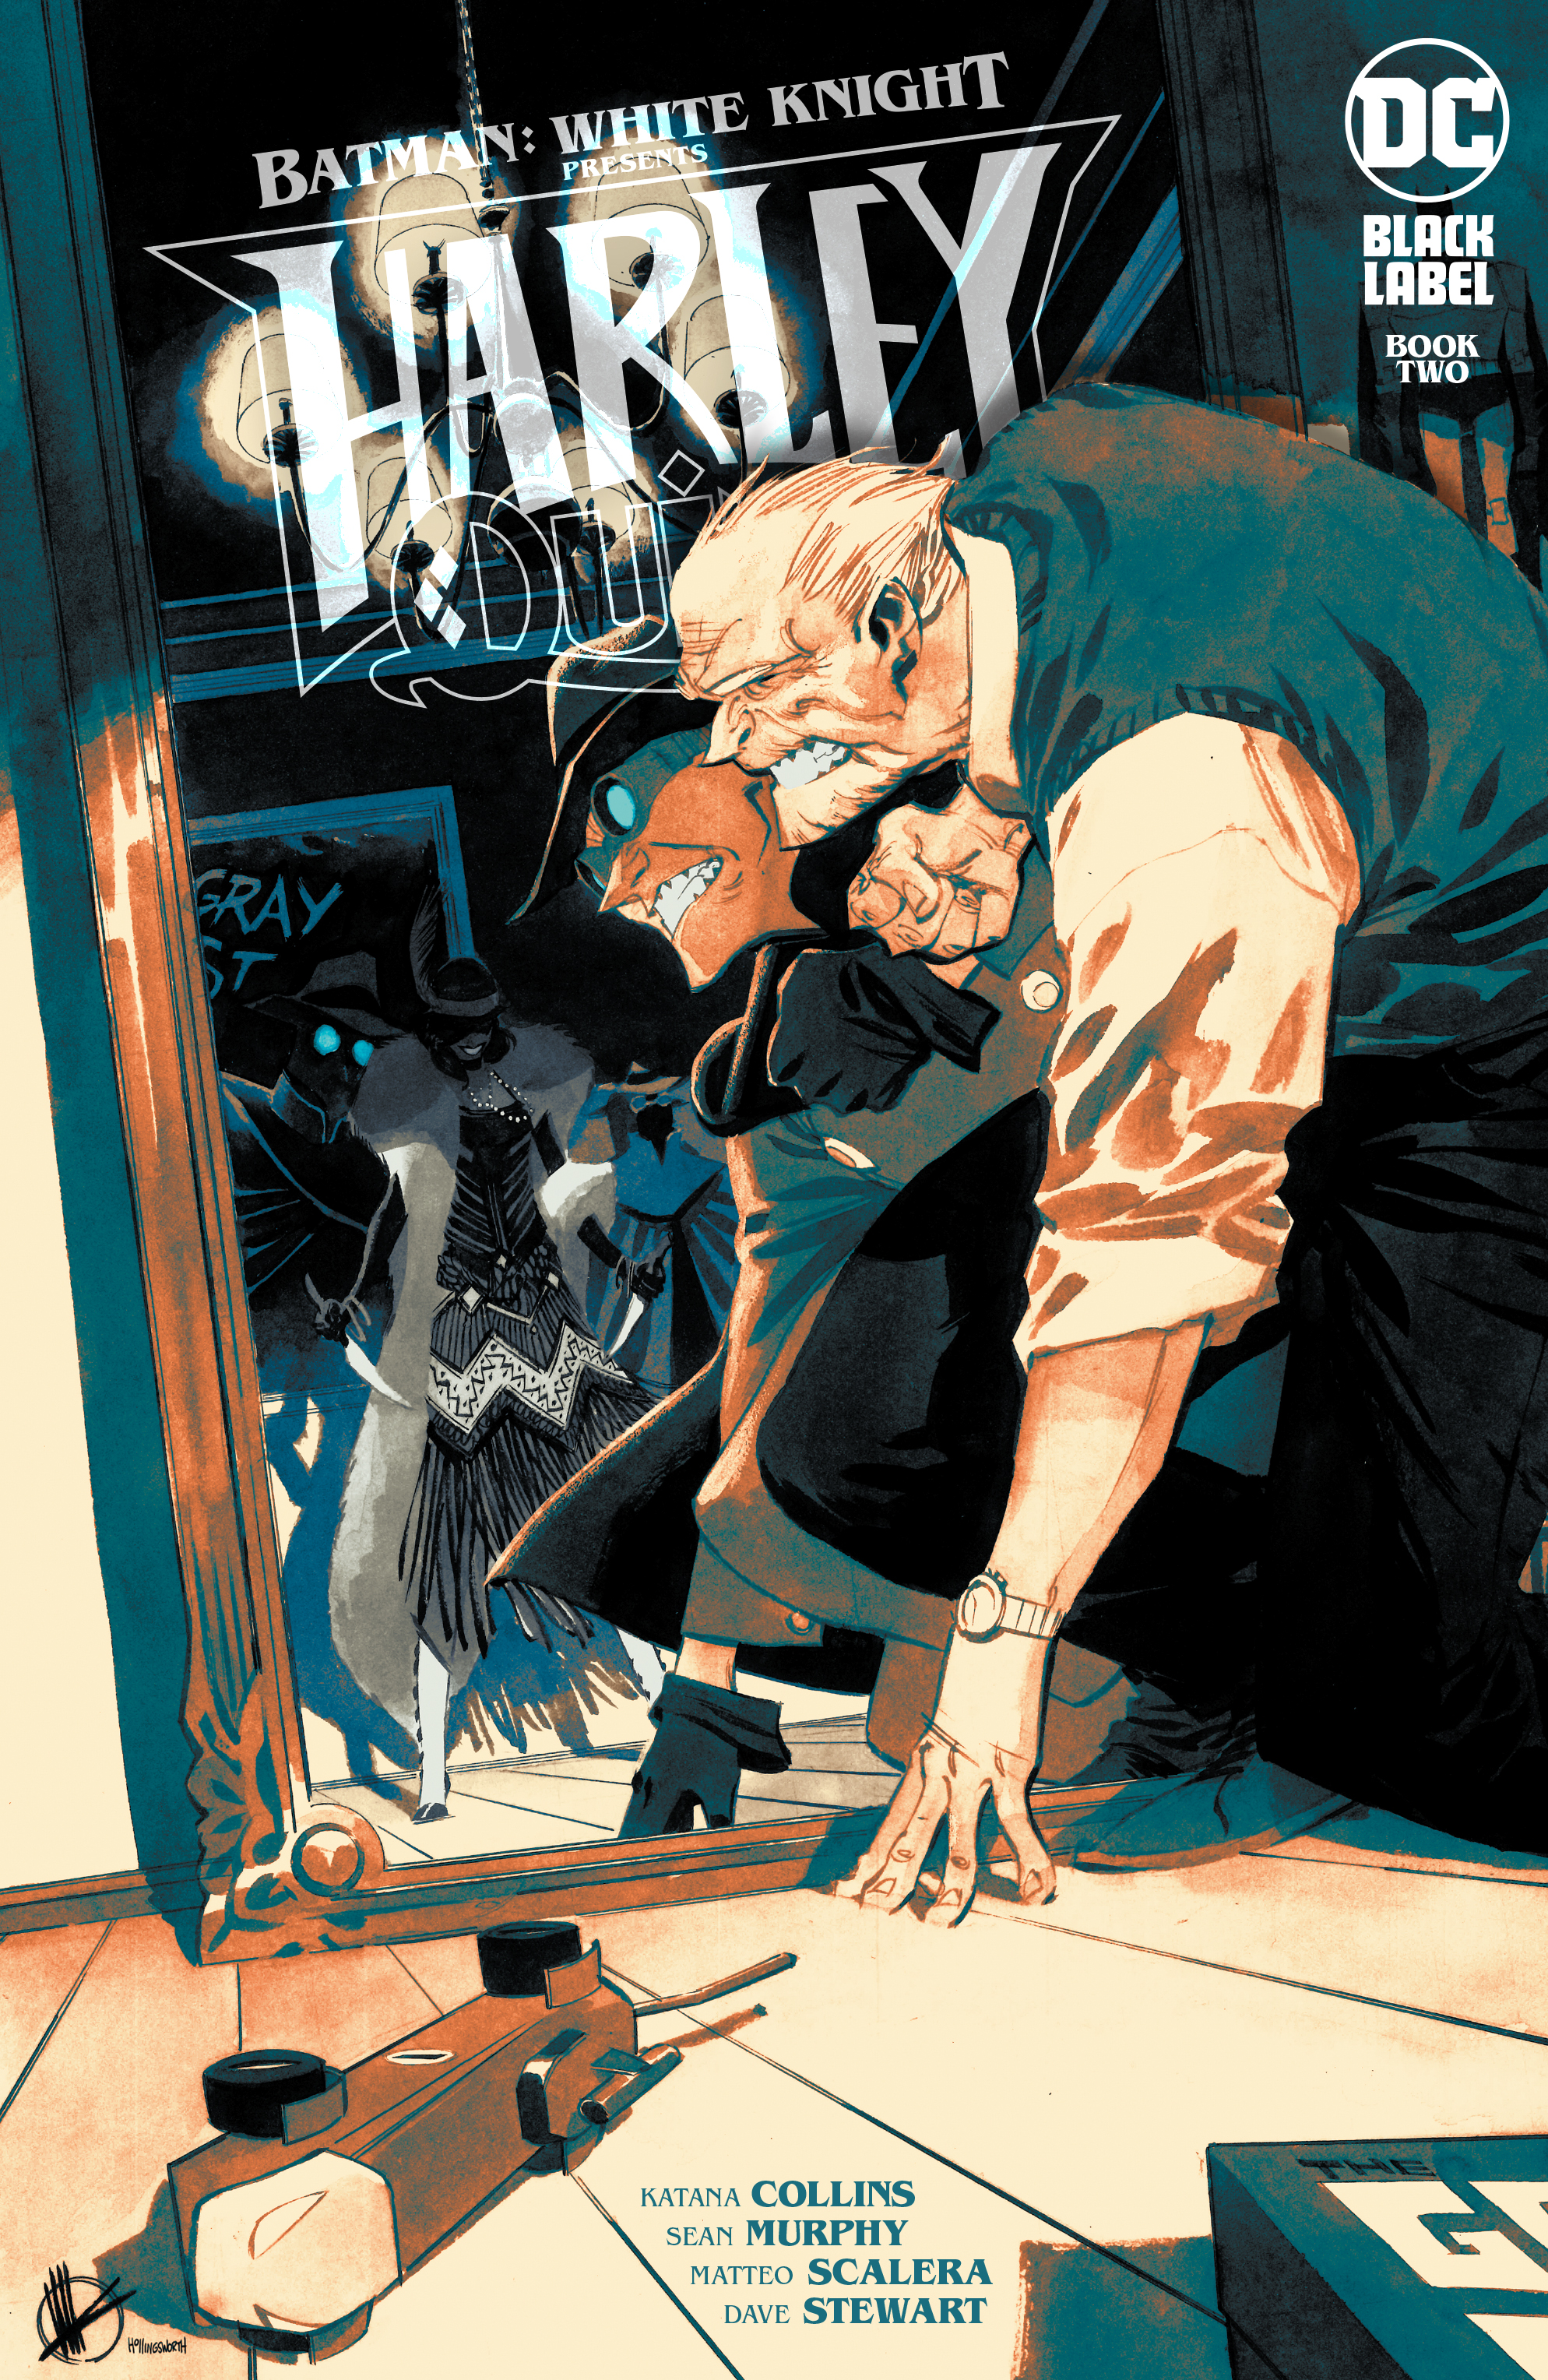 BATMAN WHITE KNIGHT PRESENTS HARLEY QUINN #2 (OF 6) CVR B - Issues -  Worlds' End Comics